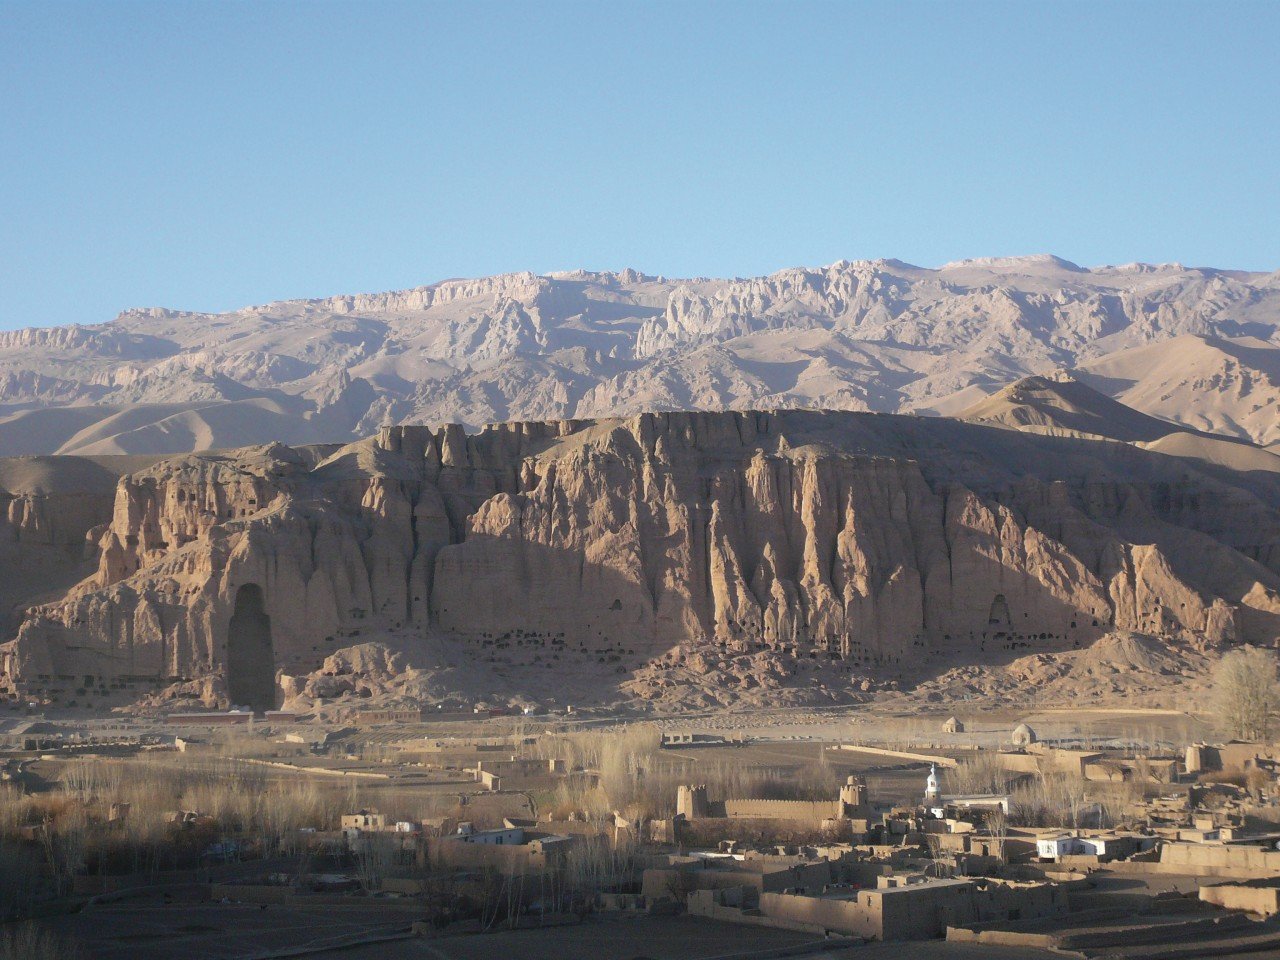 Jour17 : Traverser des vallées rocheuses vers Bamiyan